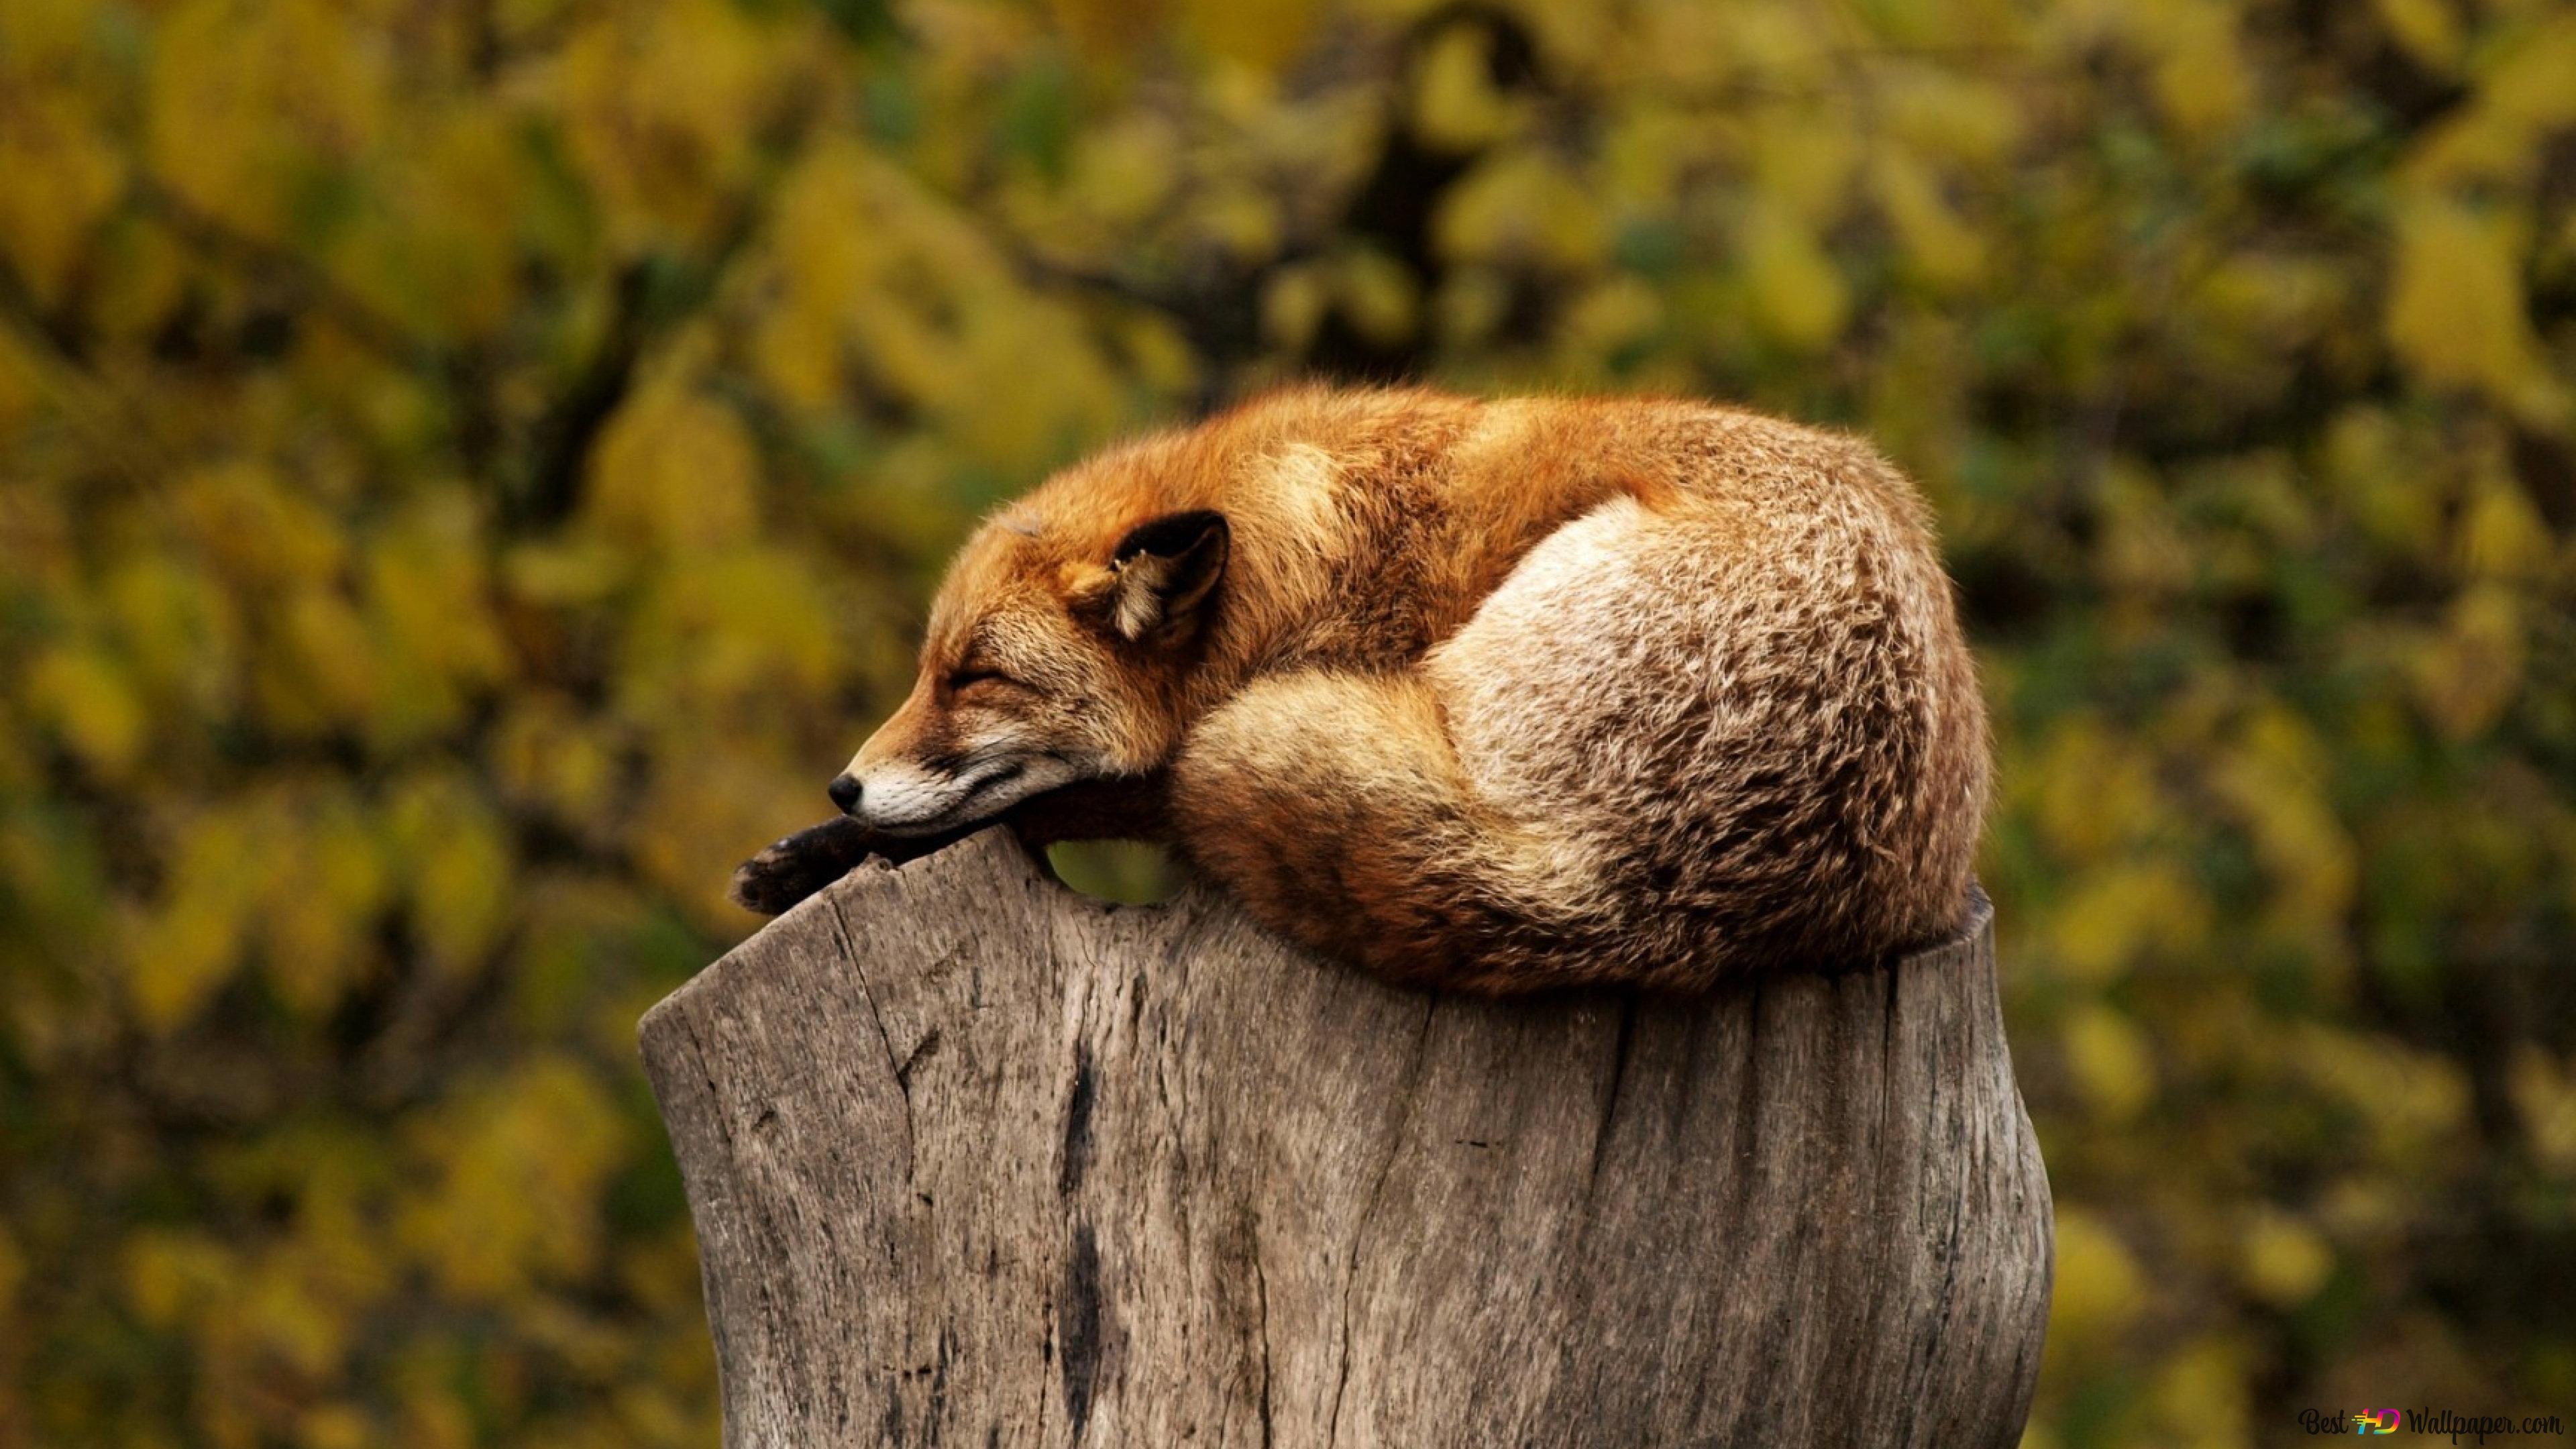 Sleeping Fox 4K wallpaper download